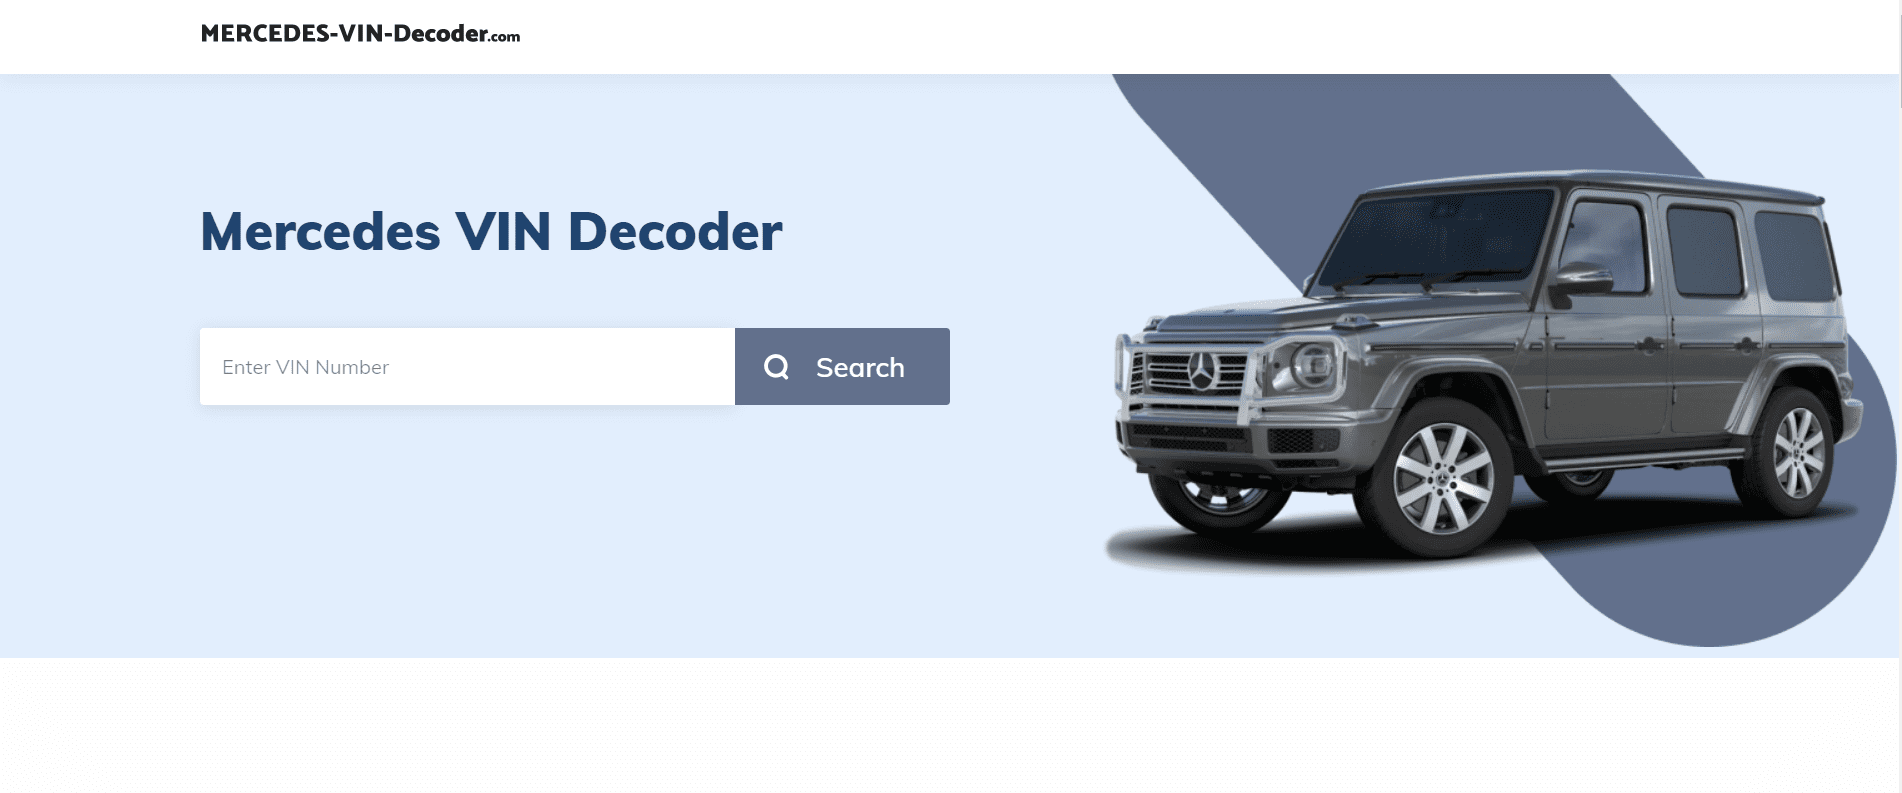 Mercedes’s VIN Decoder – The Key To Understanding A Car